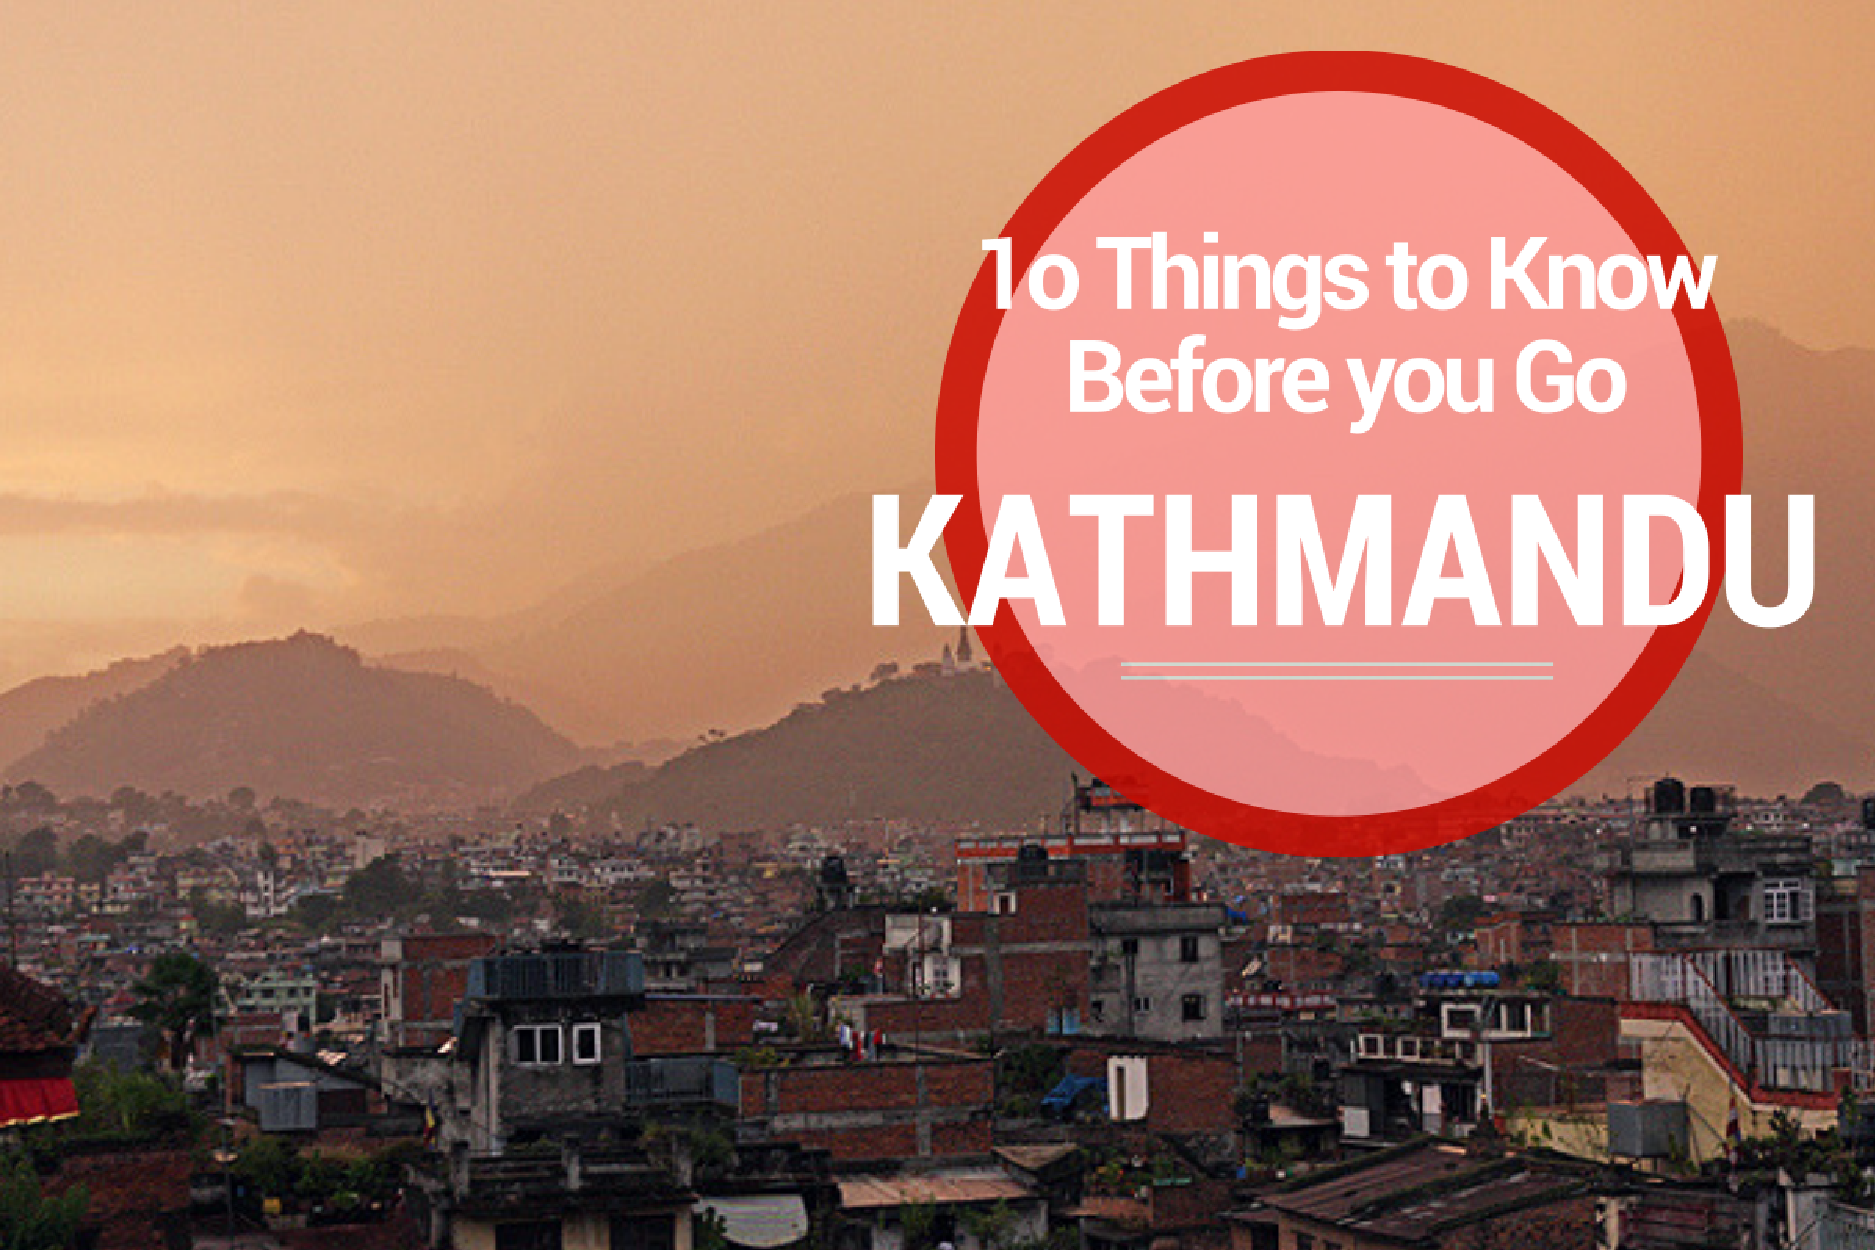 10 Things to know before you go to Kathmandu, Kathmandu travel guide